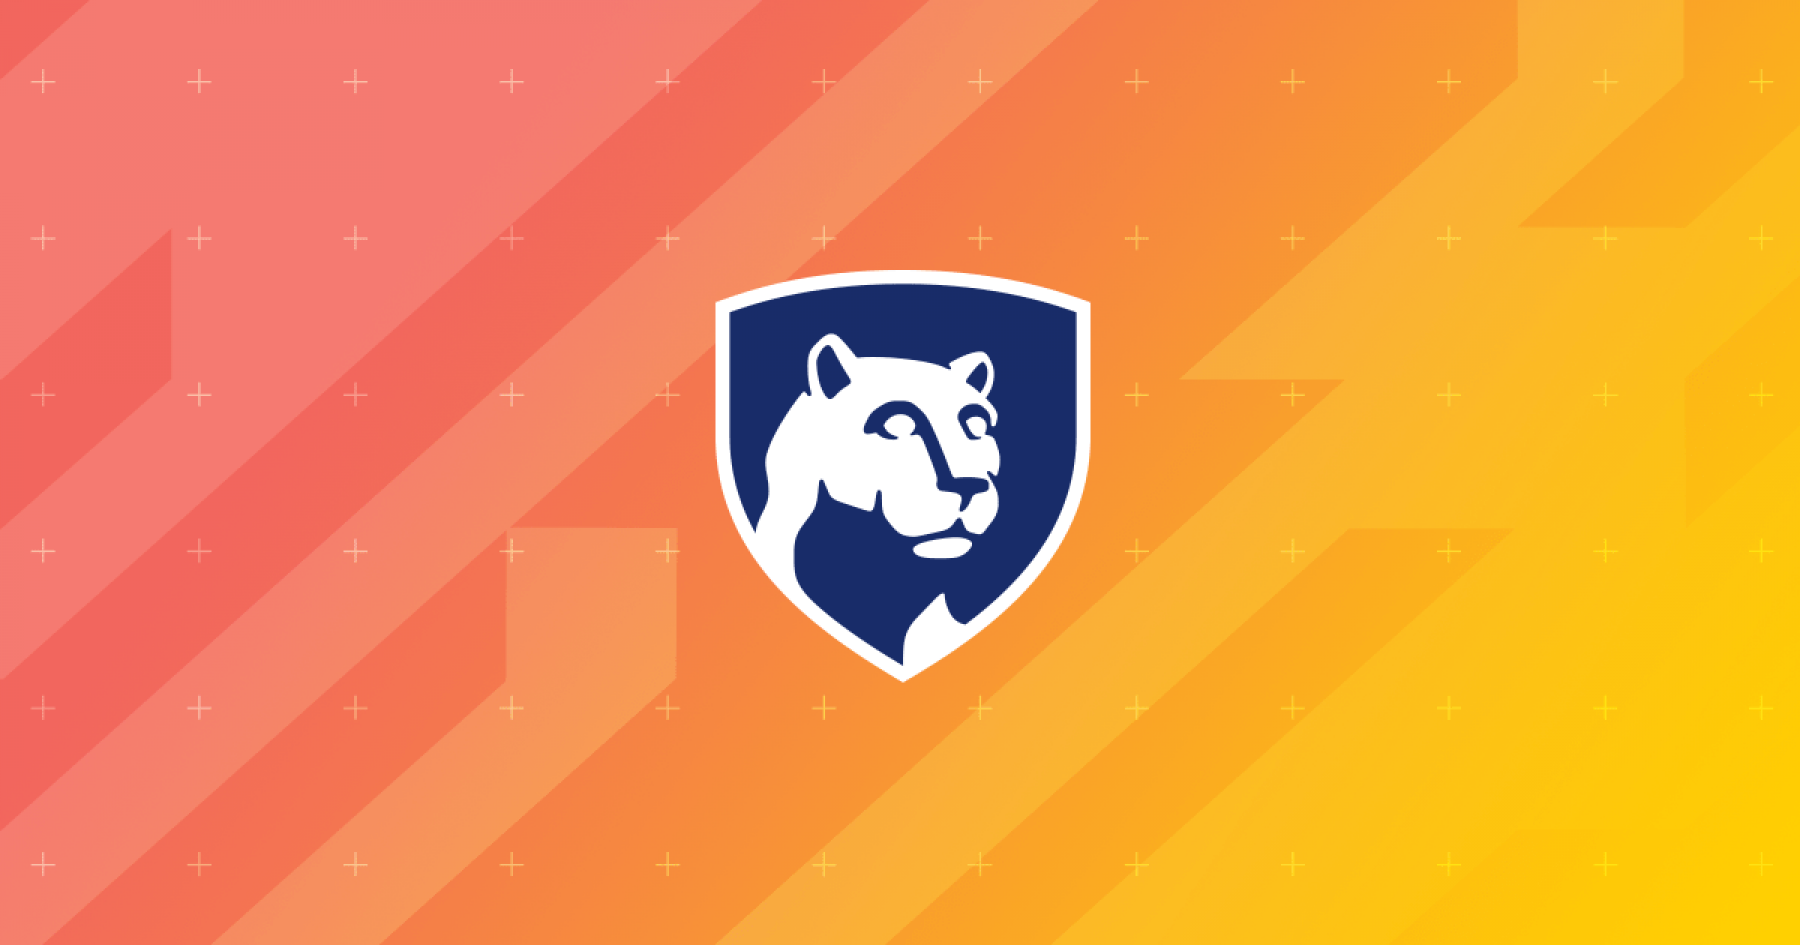 Penn State logo graphic